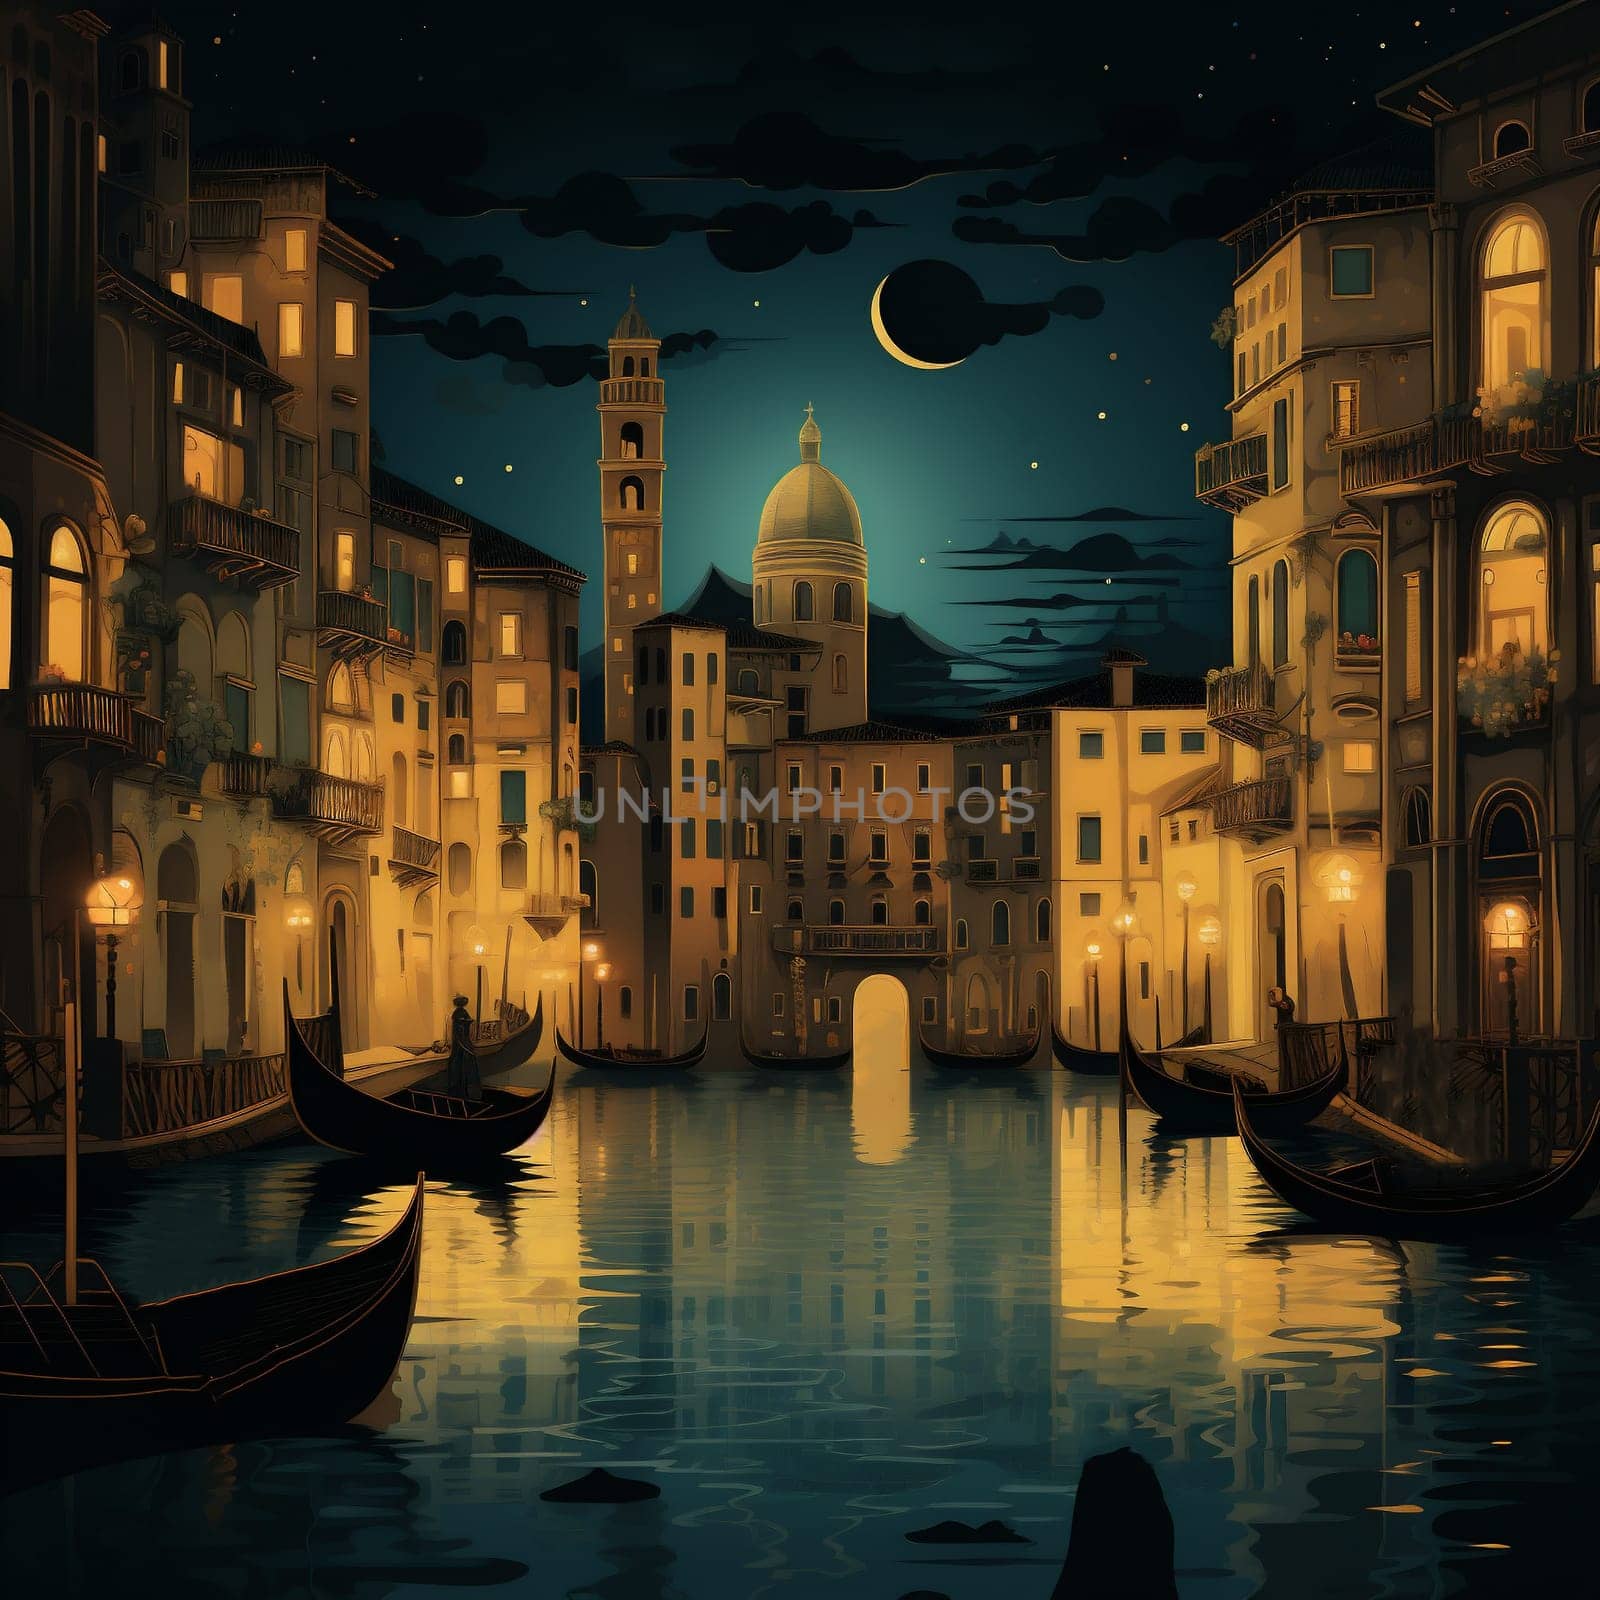 Night Italy Old Town Night Street Illustration. by Rina_Dozornaya